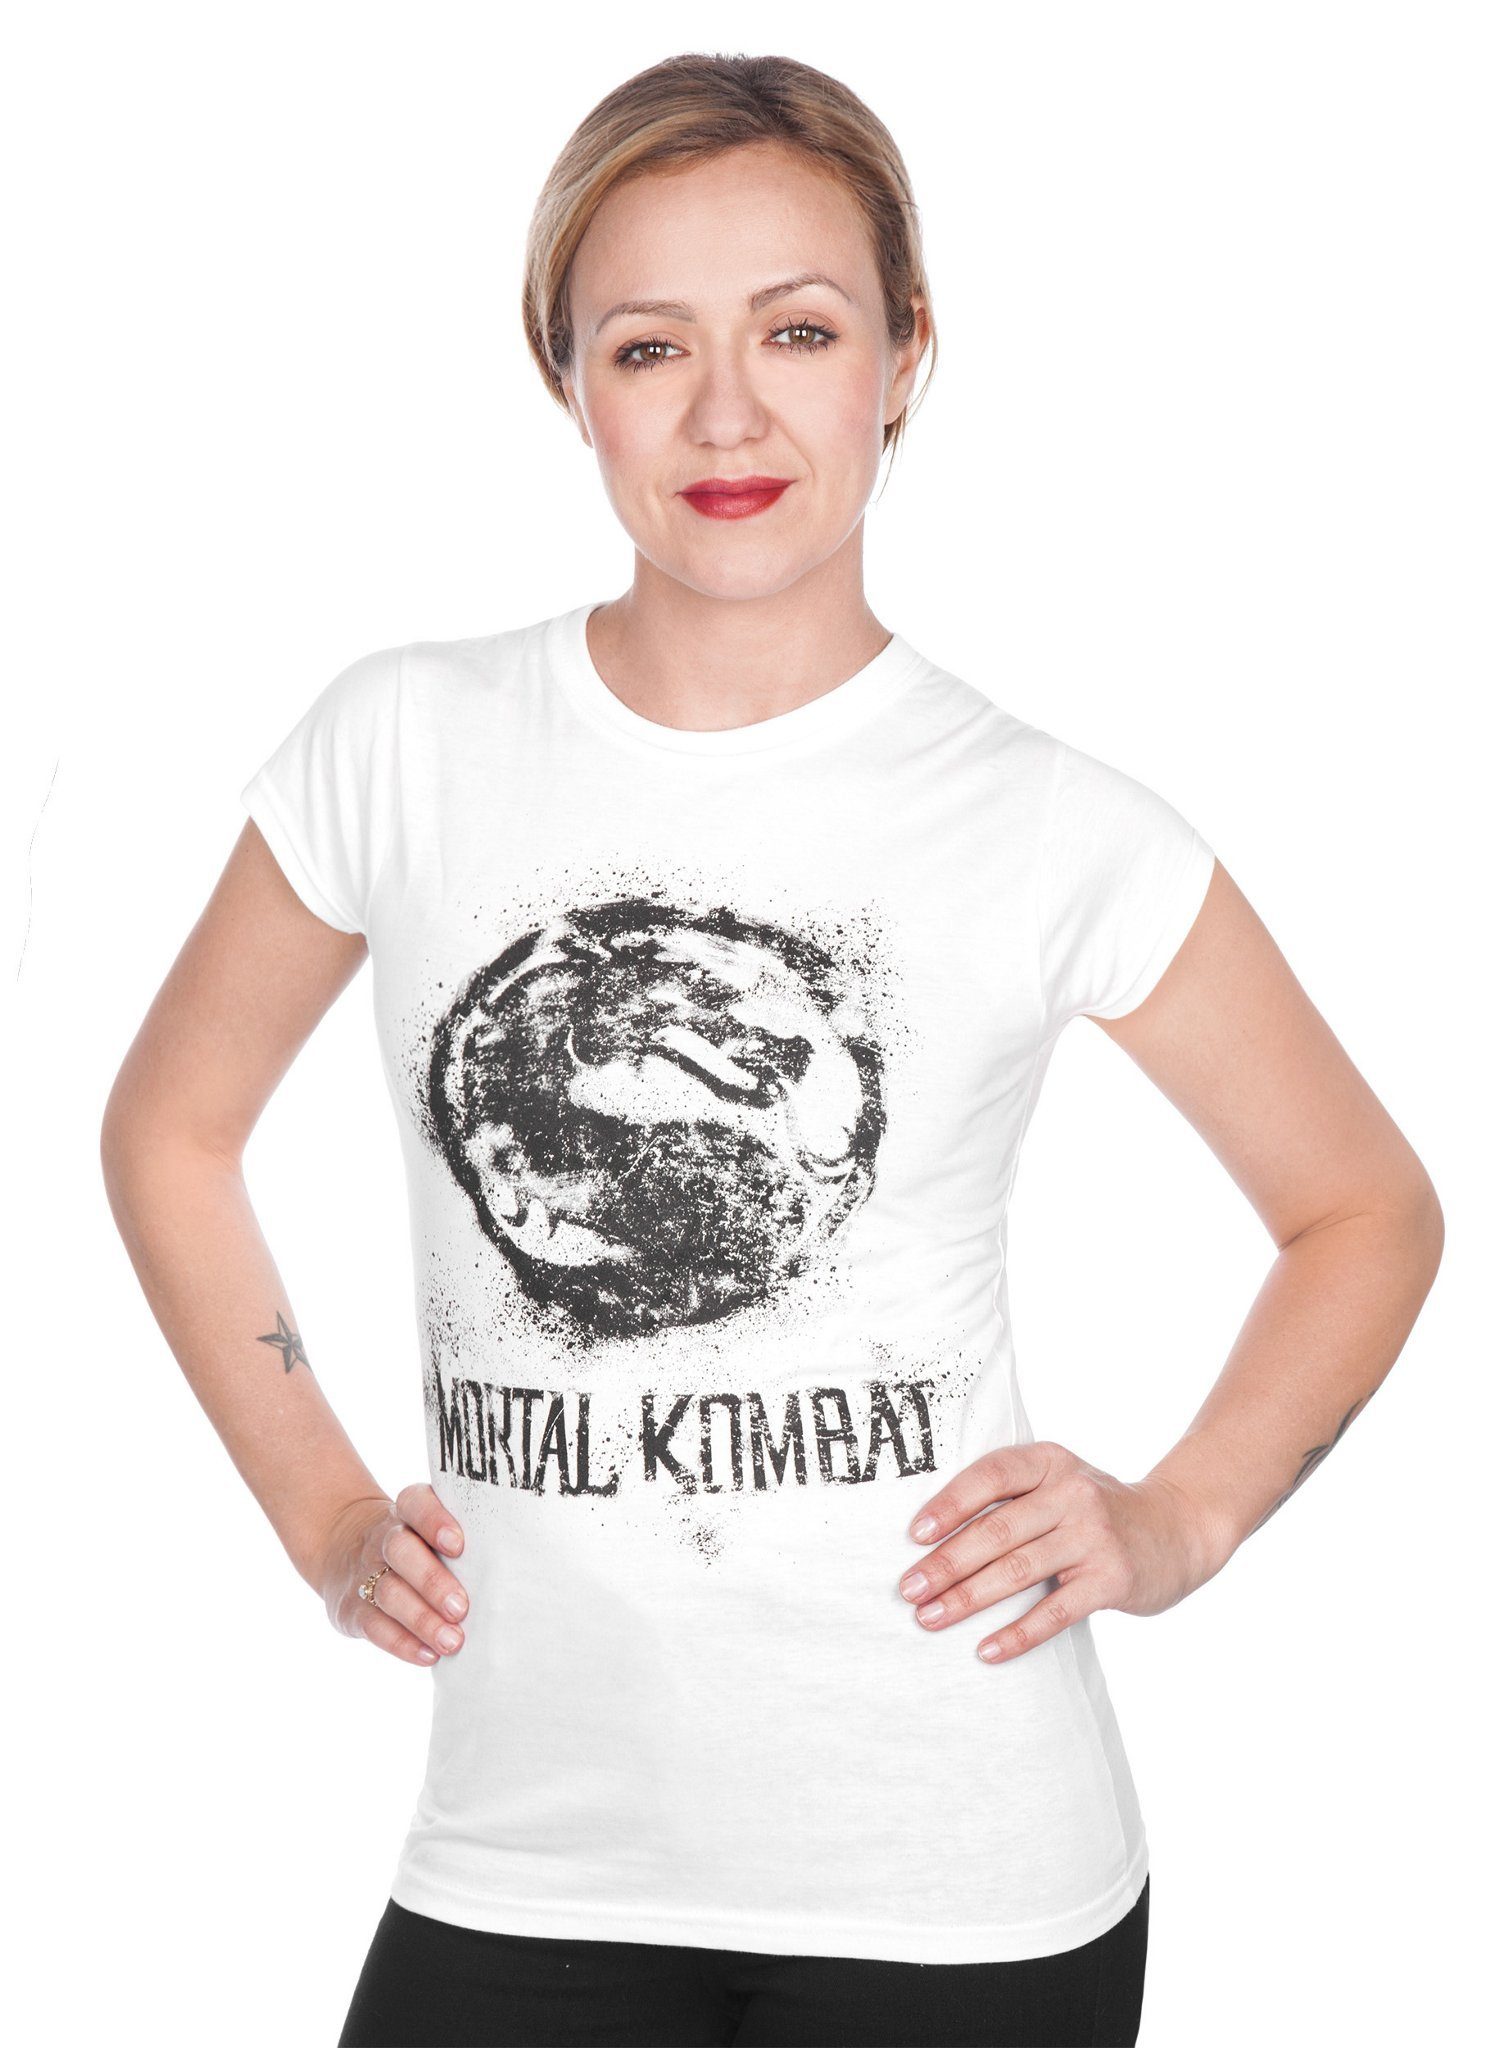 Kombat Girlie Shirt für ist Gamer und Mortal Drache ein Girlie T-Shirt cooles Hemd leid Shirt Das Metamorph